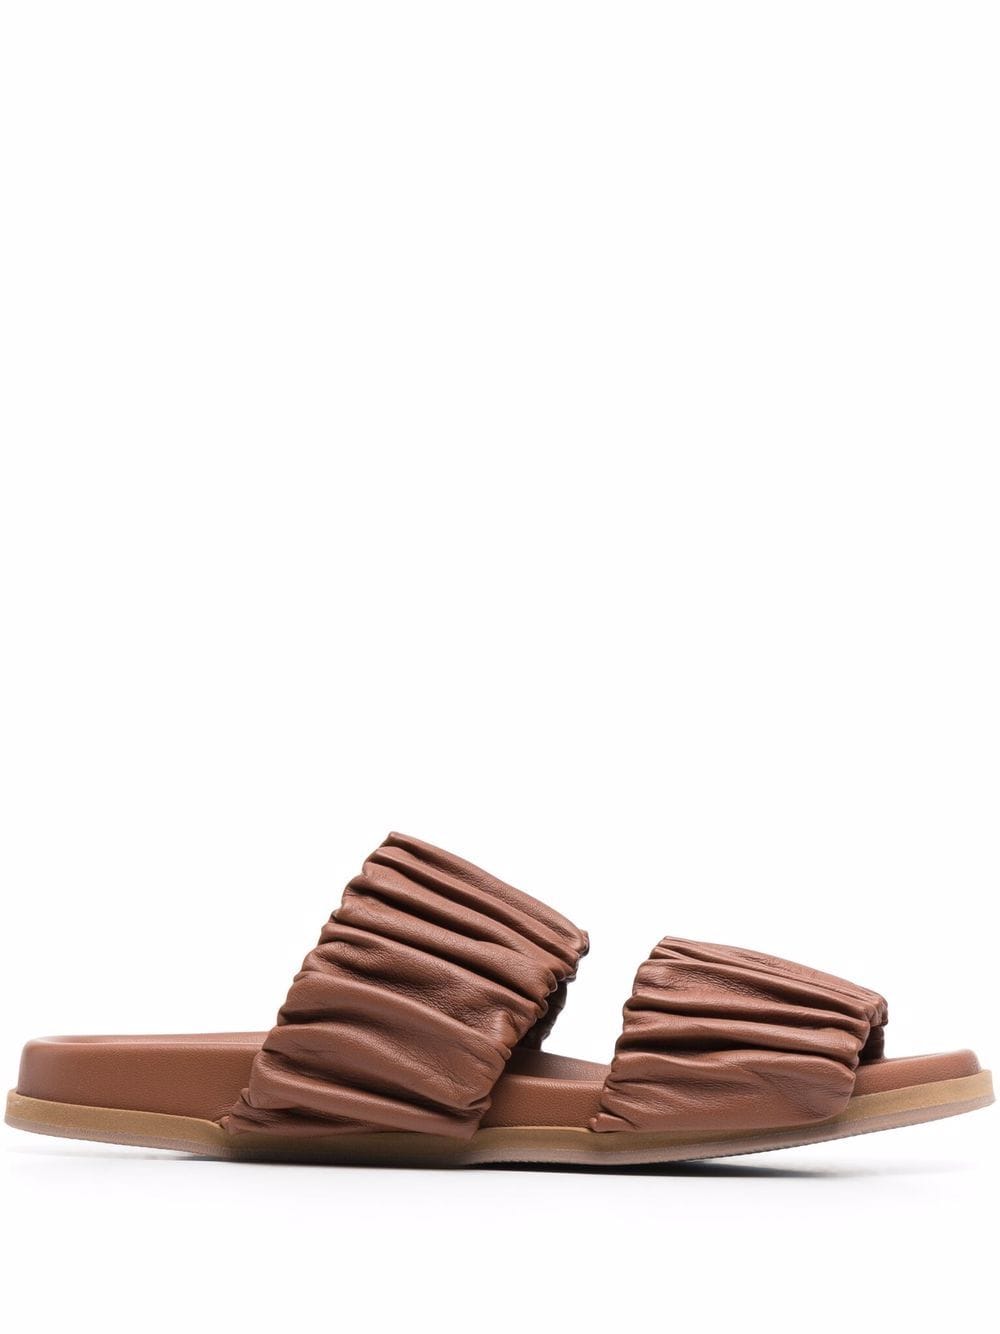 Santoni ruched leather sandals - Brown von Santoni